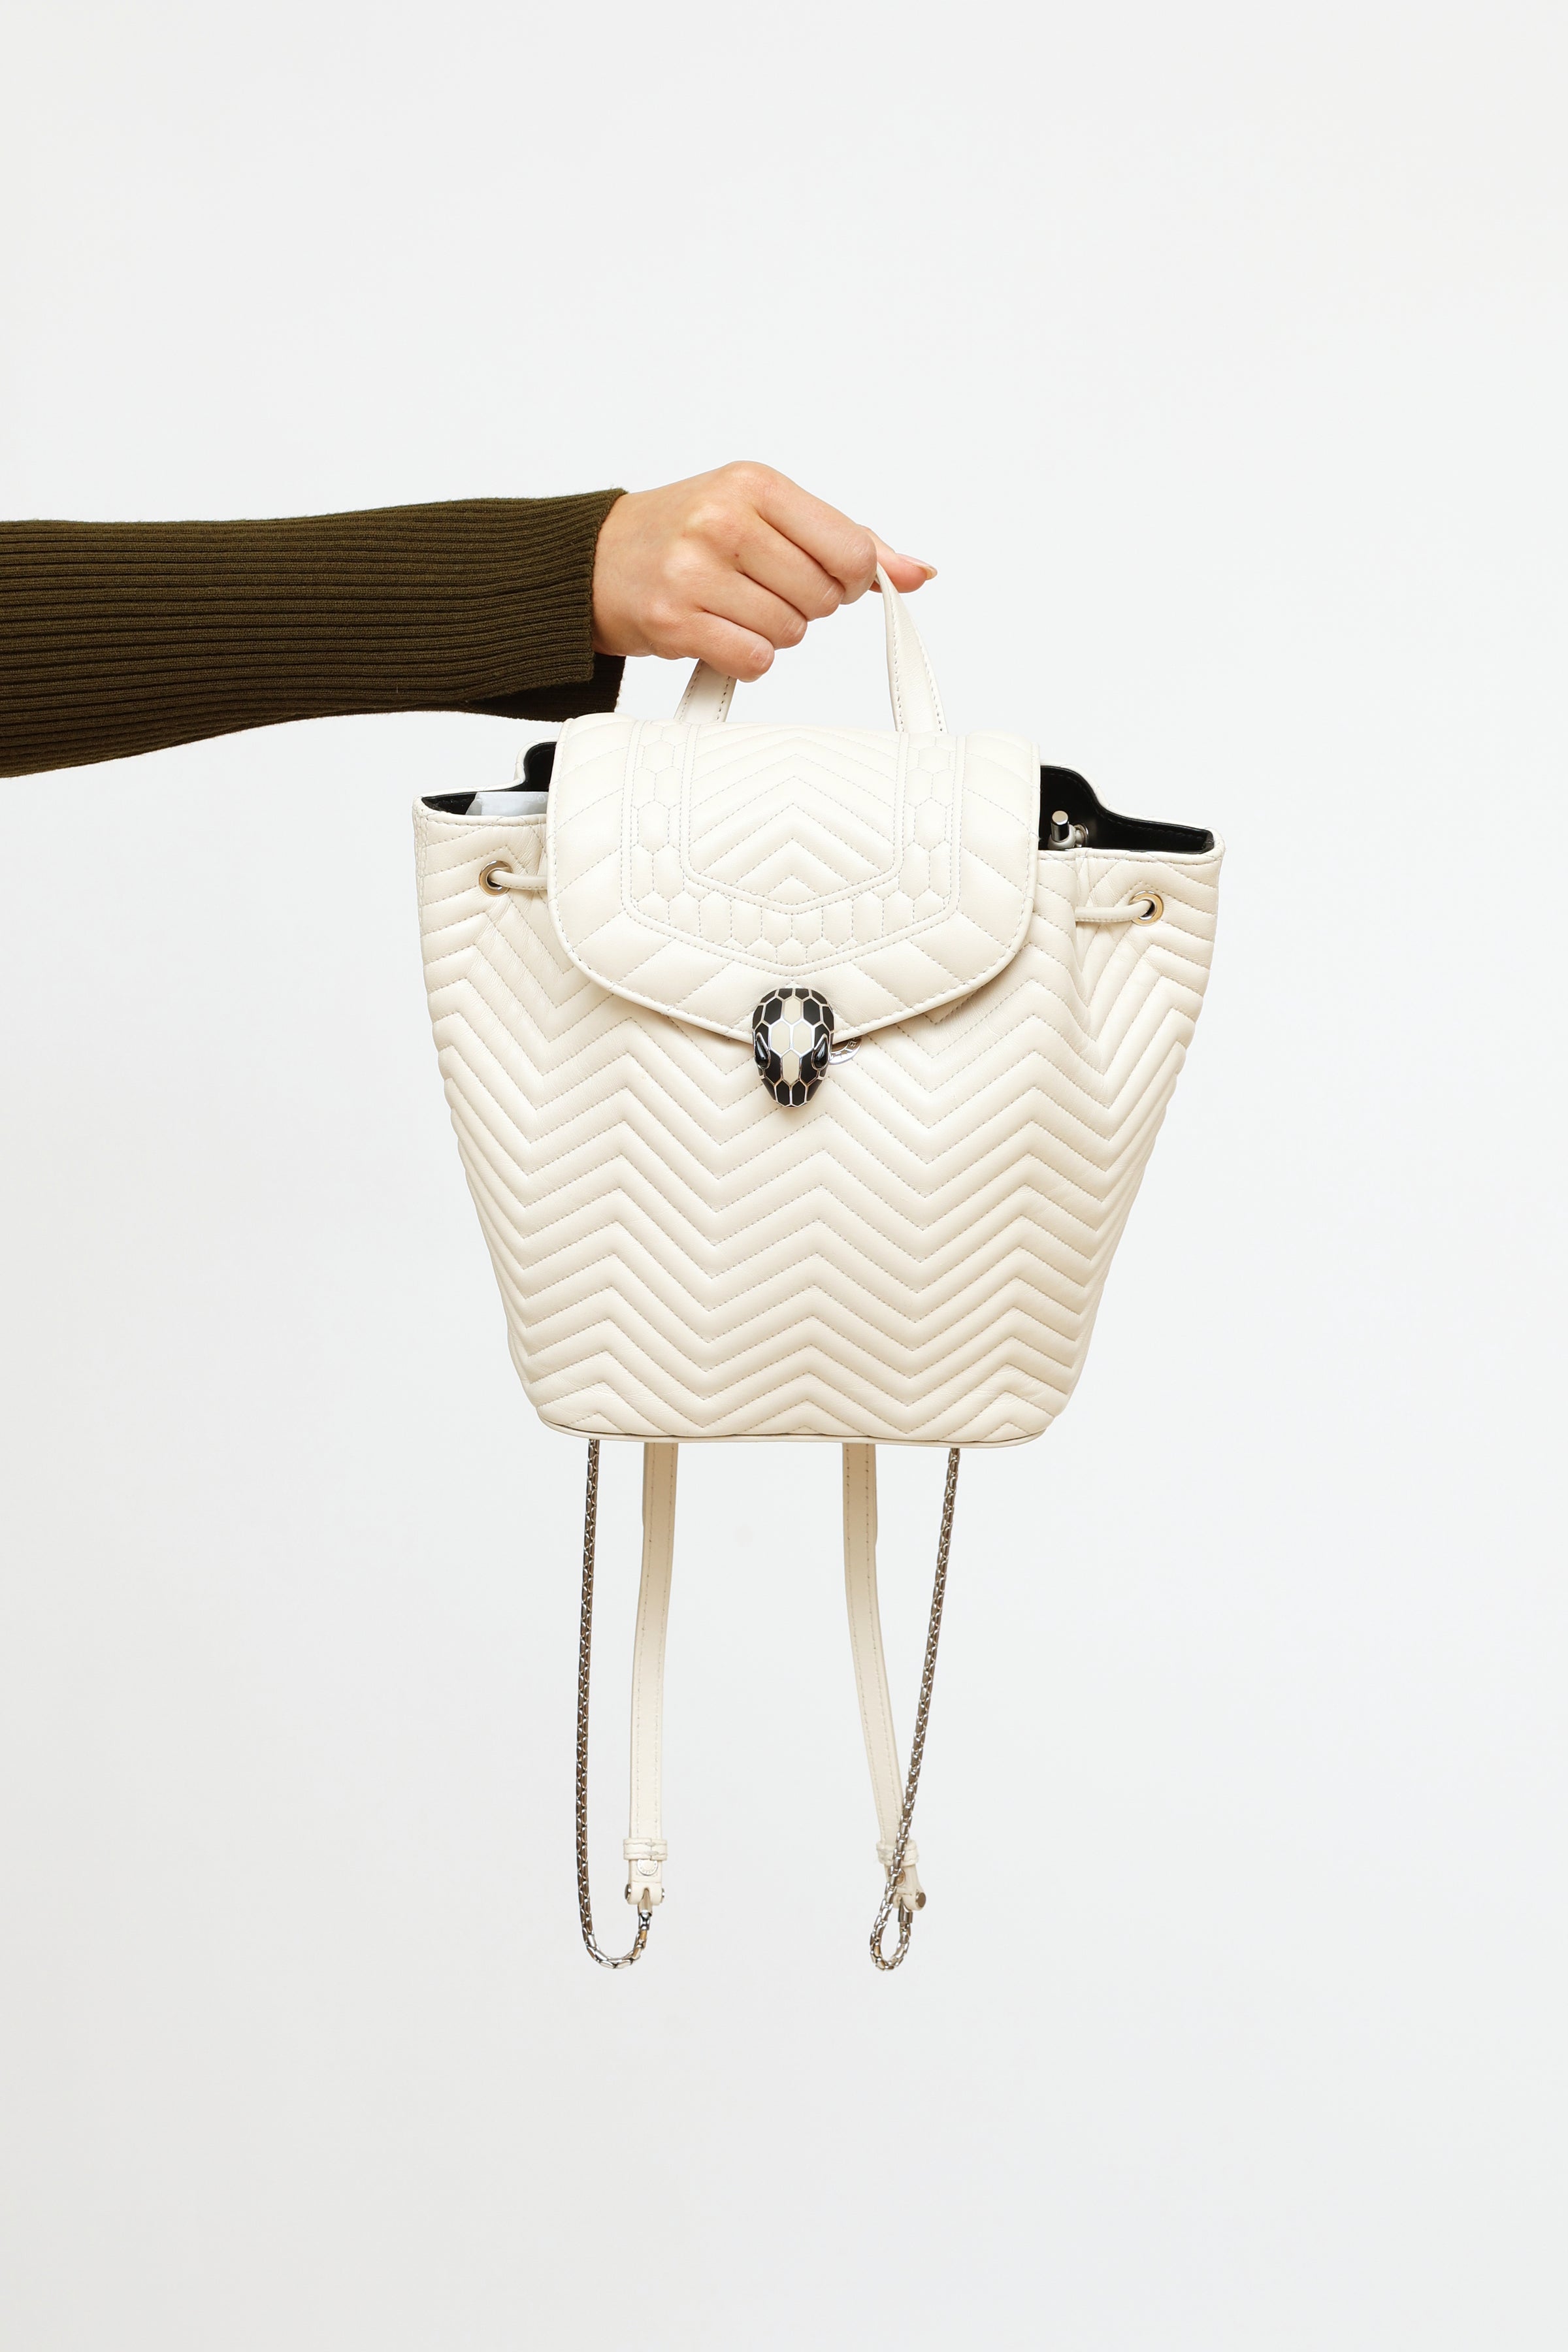 Serpenti leather handbag Bvlgari White in Leather - 8760172